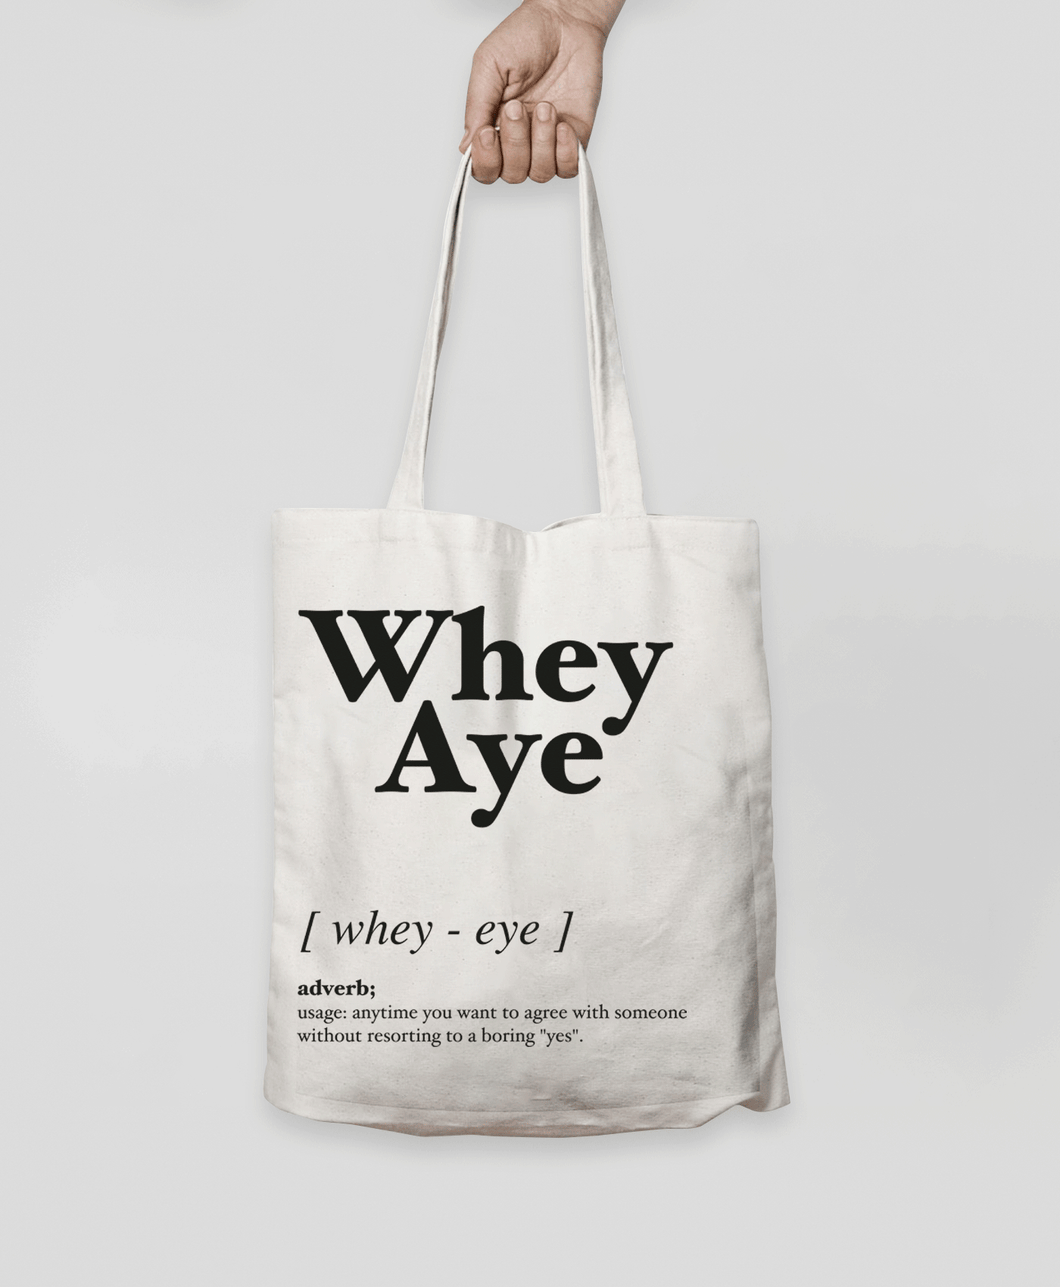 Whey Aye - Tote Bag